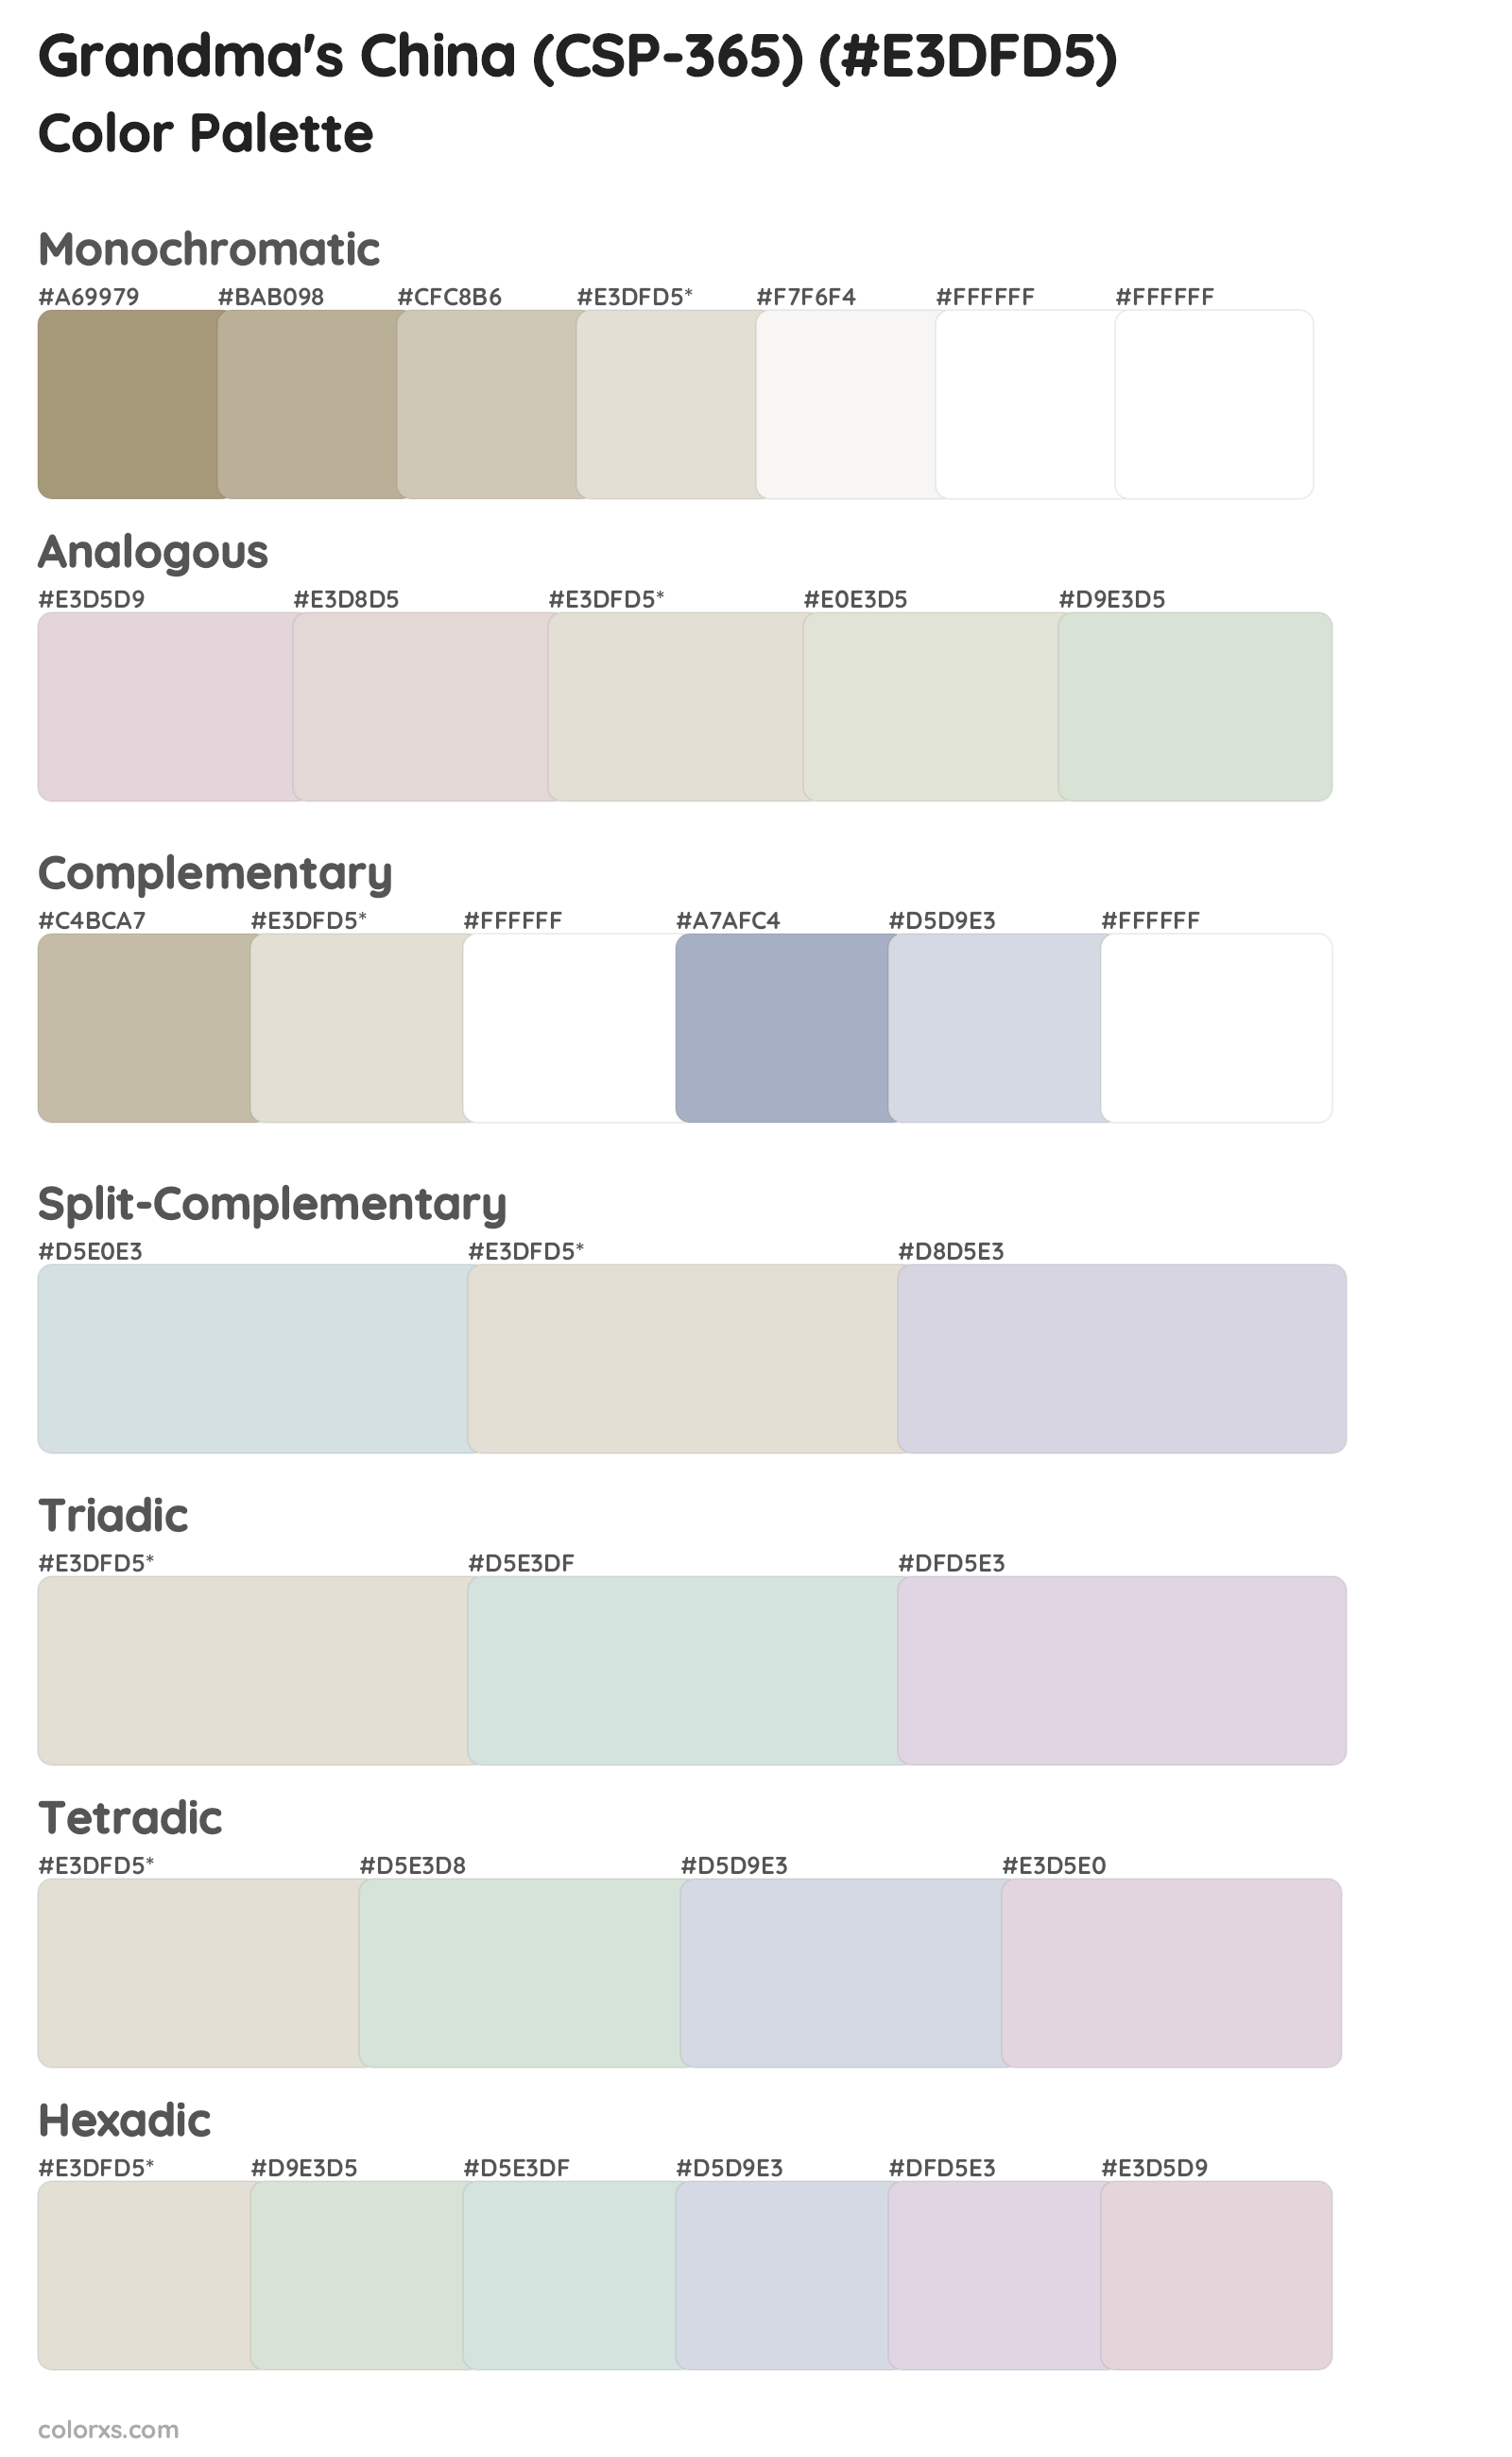 Grandma's China (CSP-365) Color Scheme Palettes